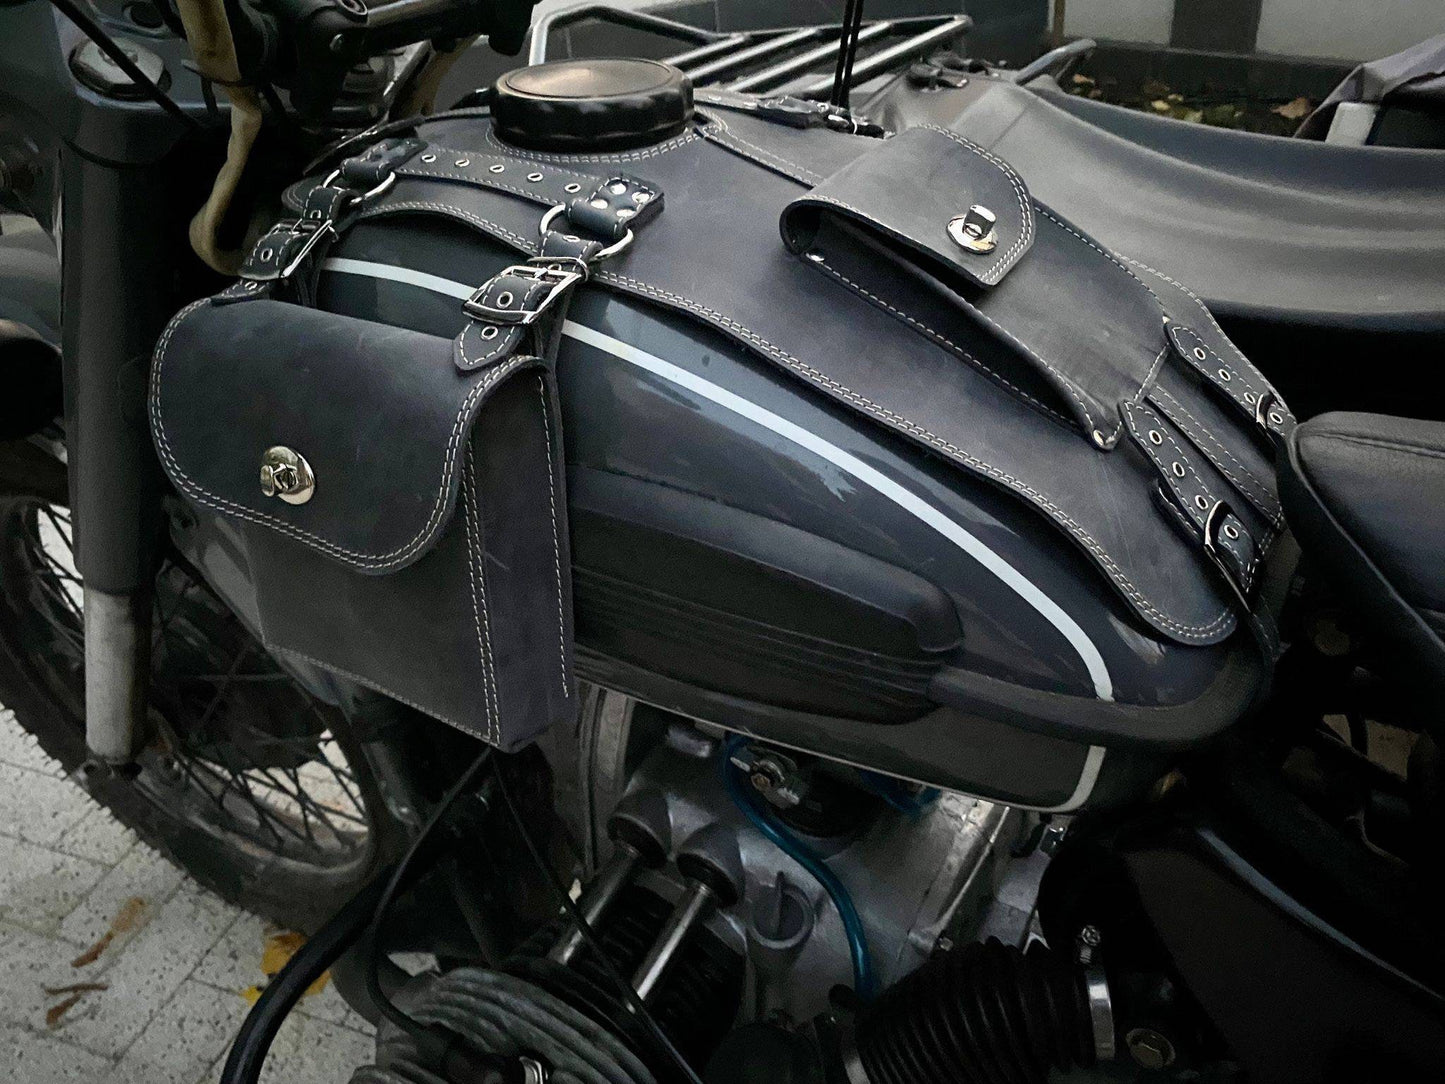 Ural fuel tank leather cover bags- Black, Ural fuel tank gas bags genuine leather, crazy horse leather tank cover- black, Ural tank cover, Ural tank bags